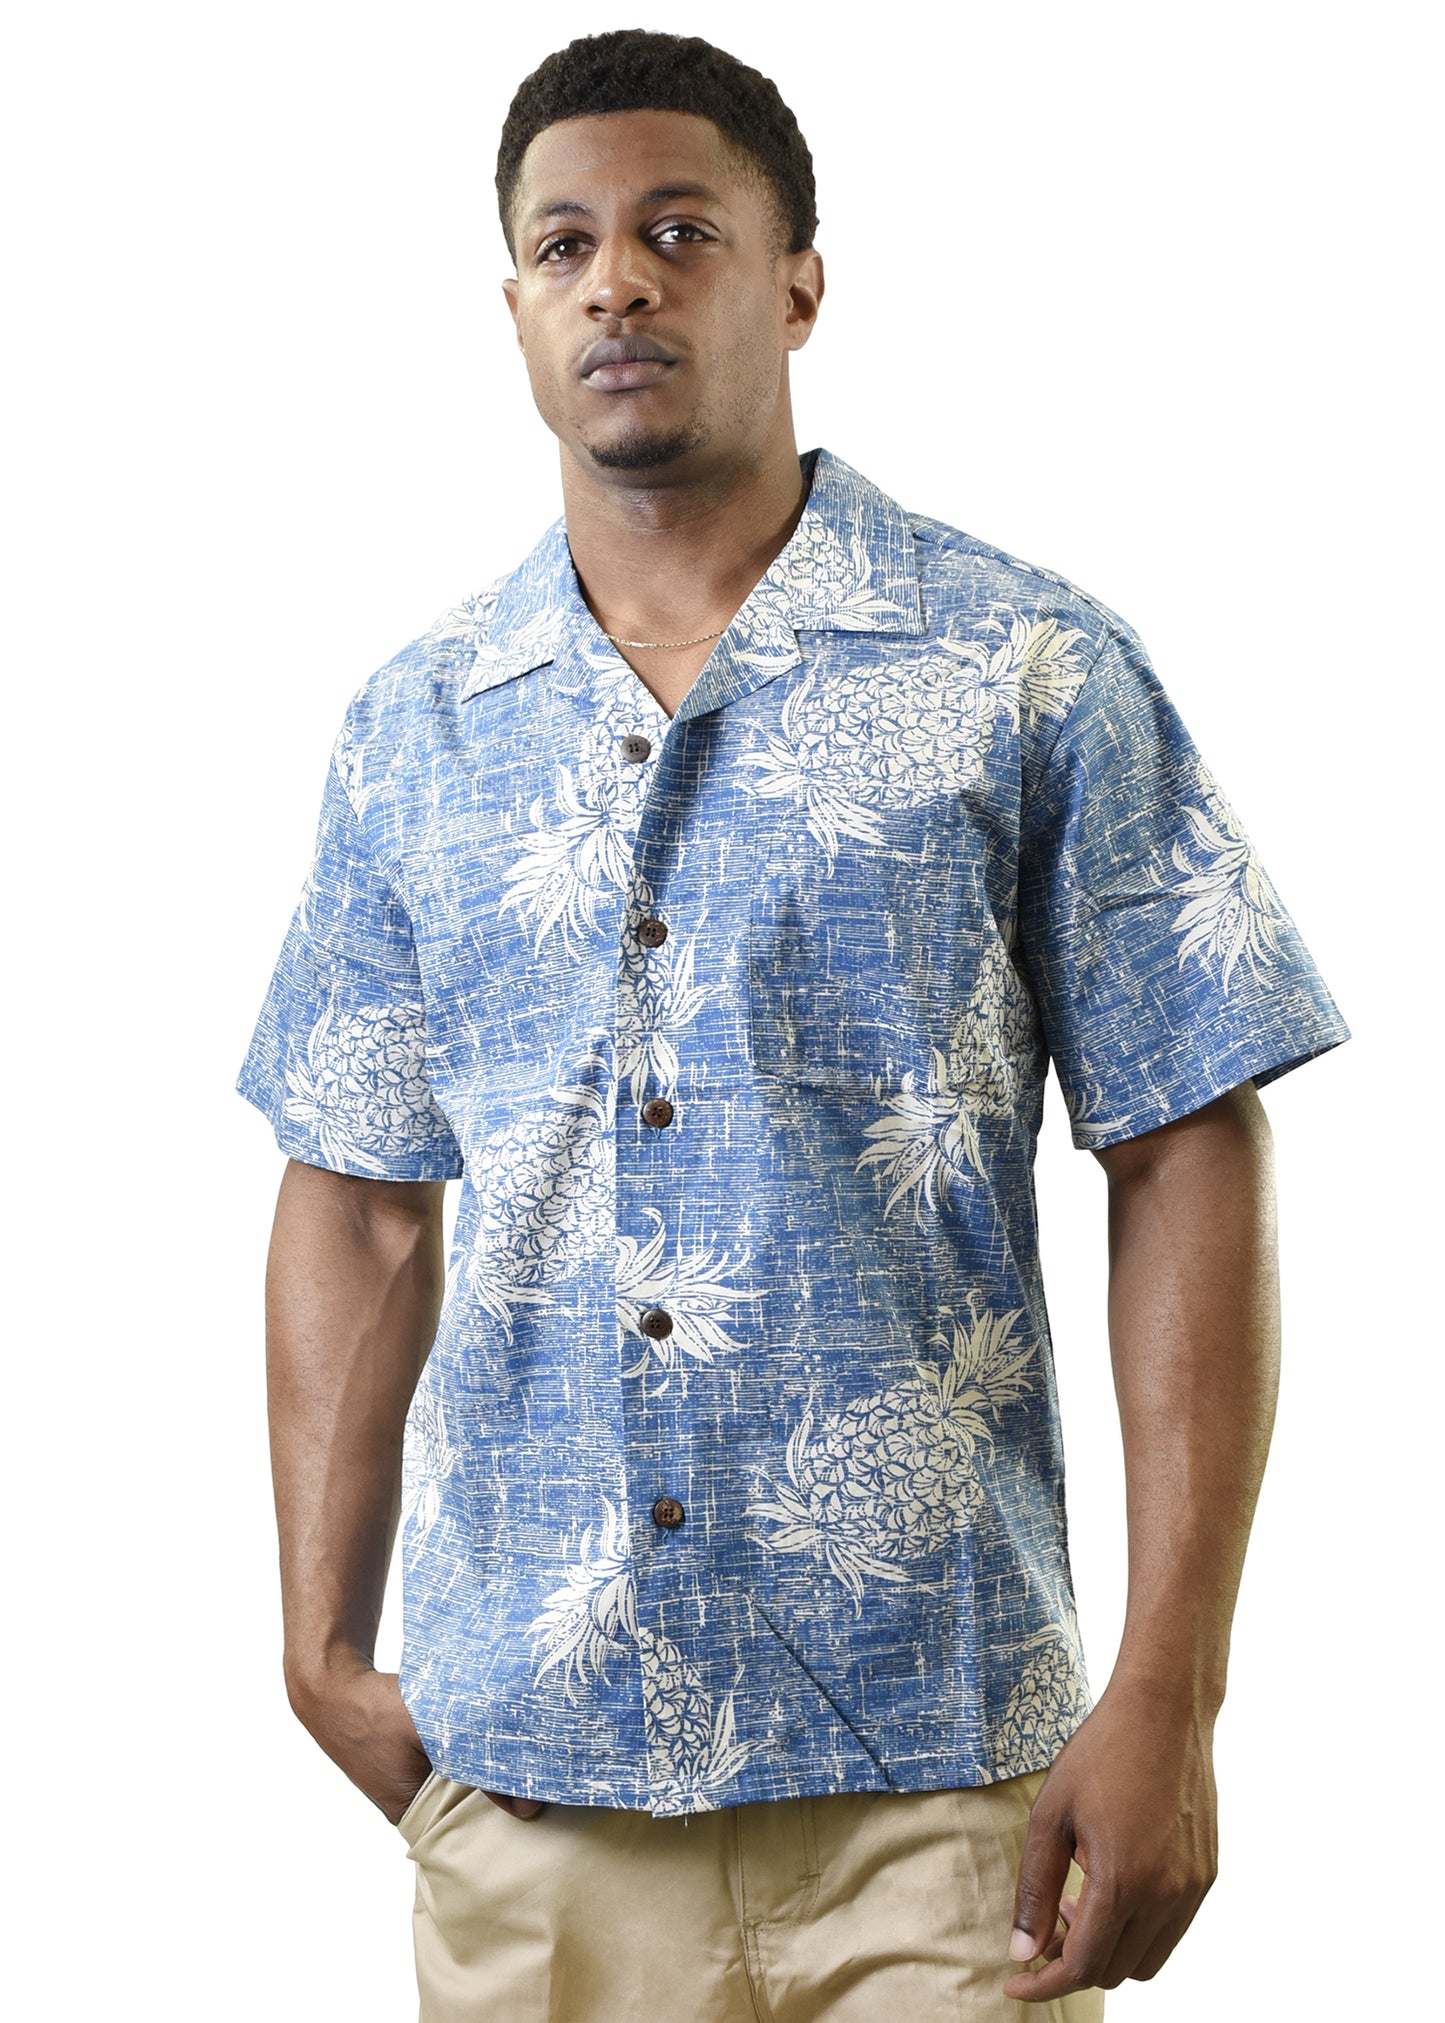 Men's Hawaiian Shirt - Cars, Surfboards and Palm Trees